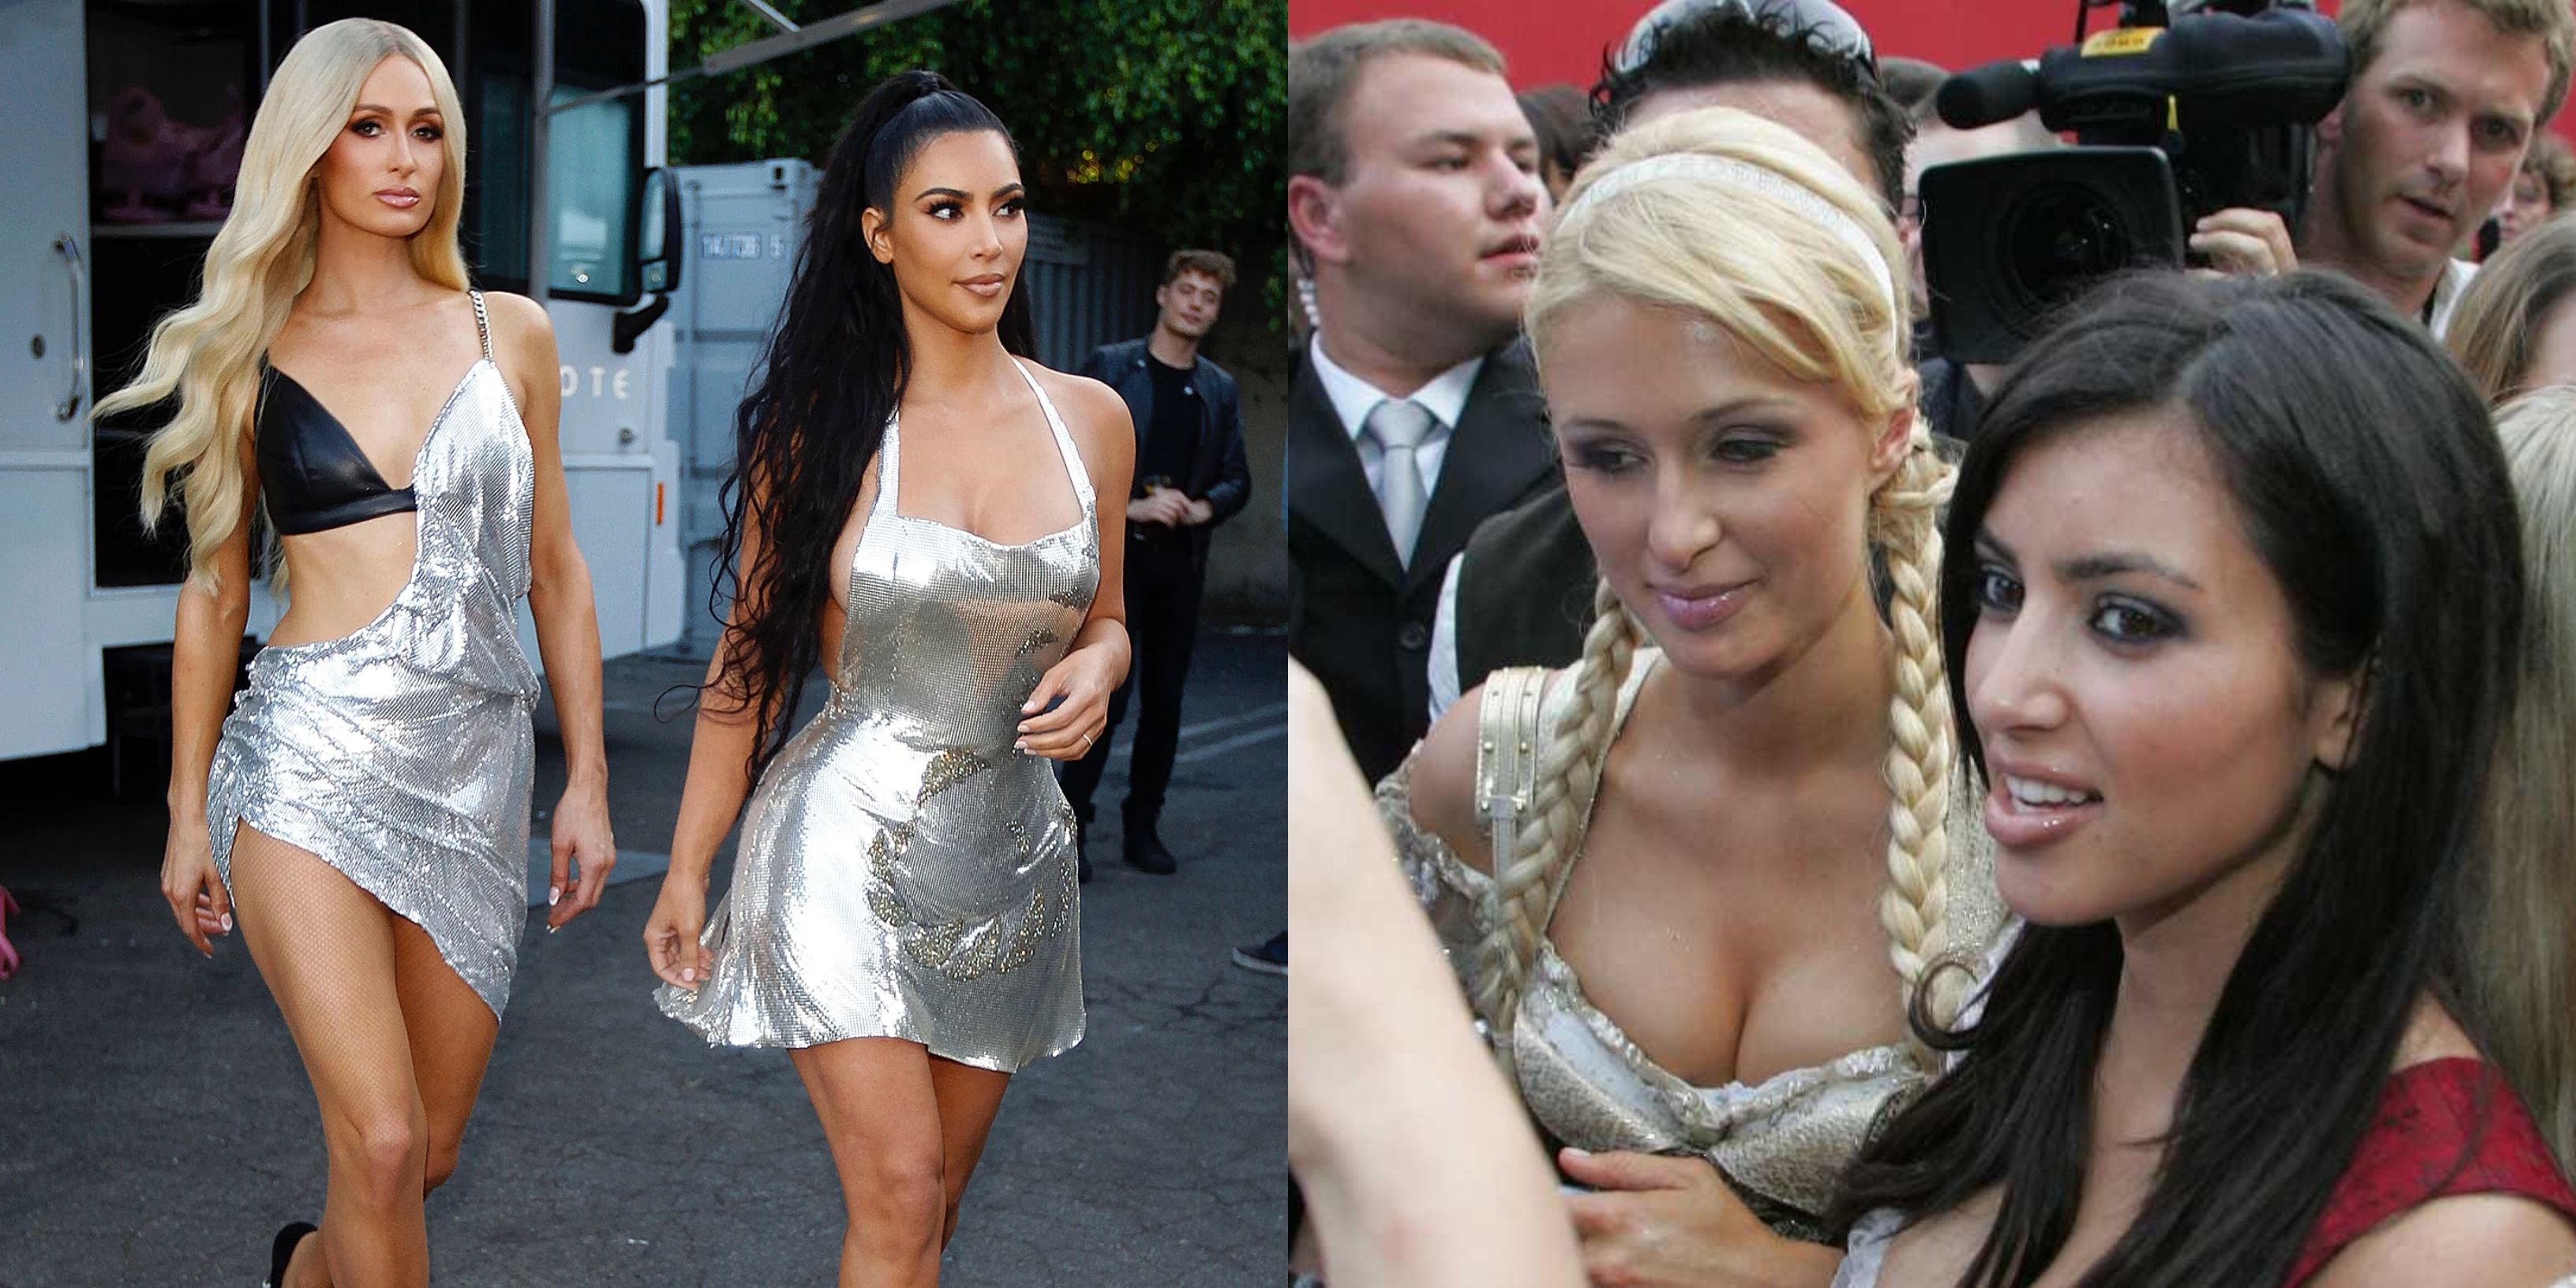 A Complete Timeline Of Paris Hilton And Kim Kardashian's Friendship 